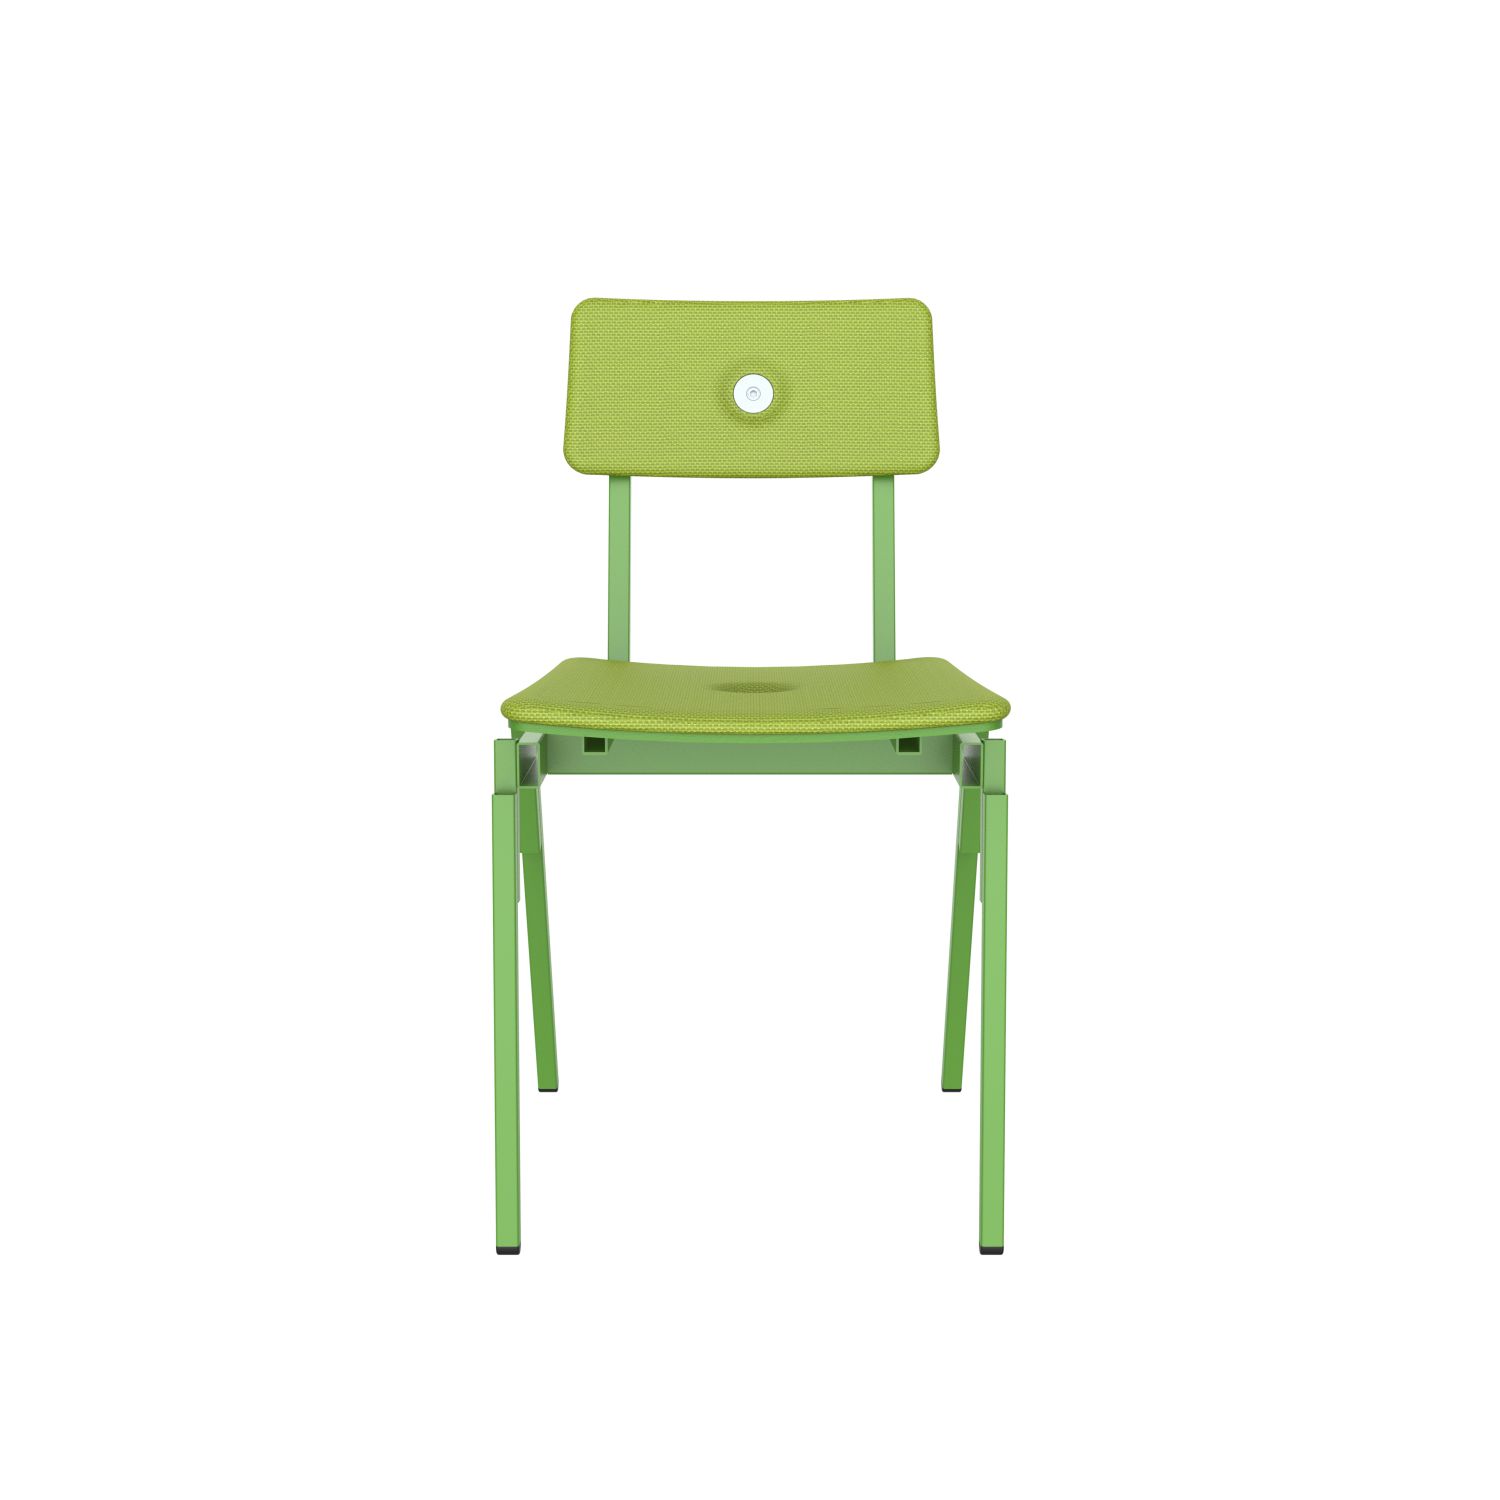 lensvelt piet hein eek mitw upholstered chair without armrests fairway green 020 yellow green ral6018 hard leg ends